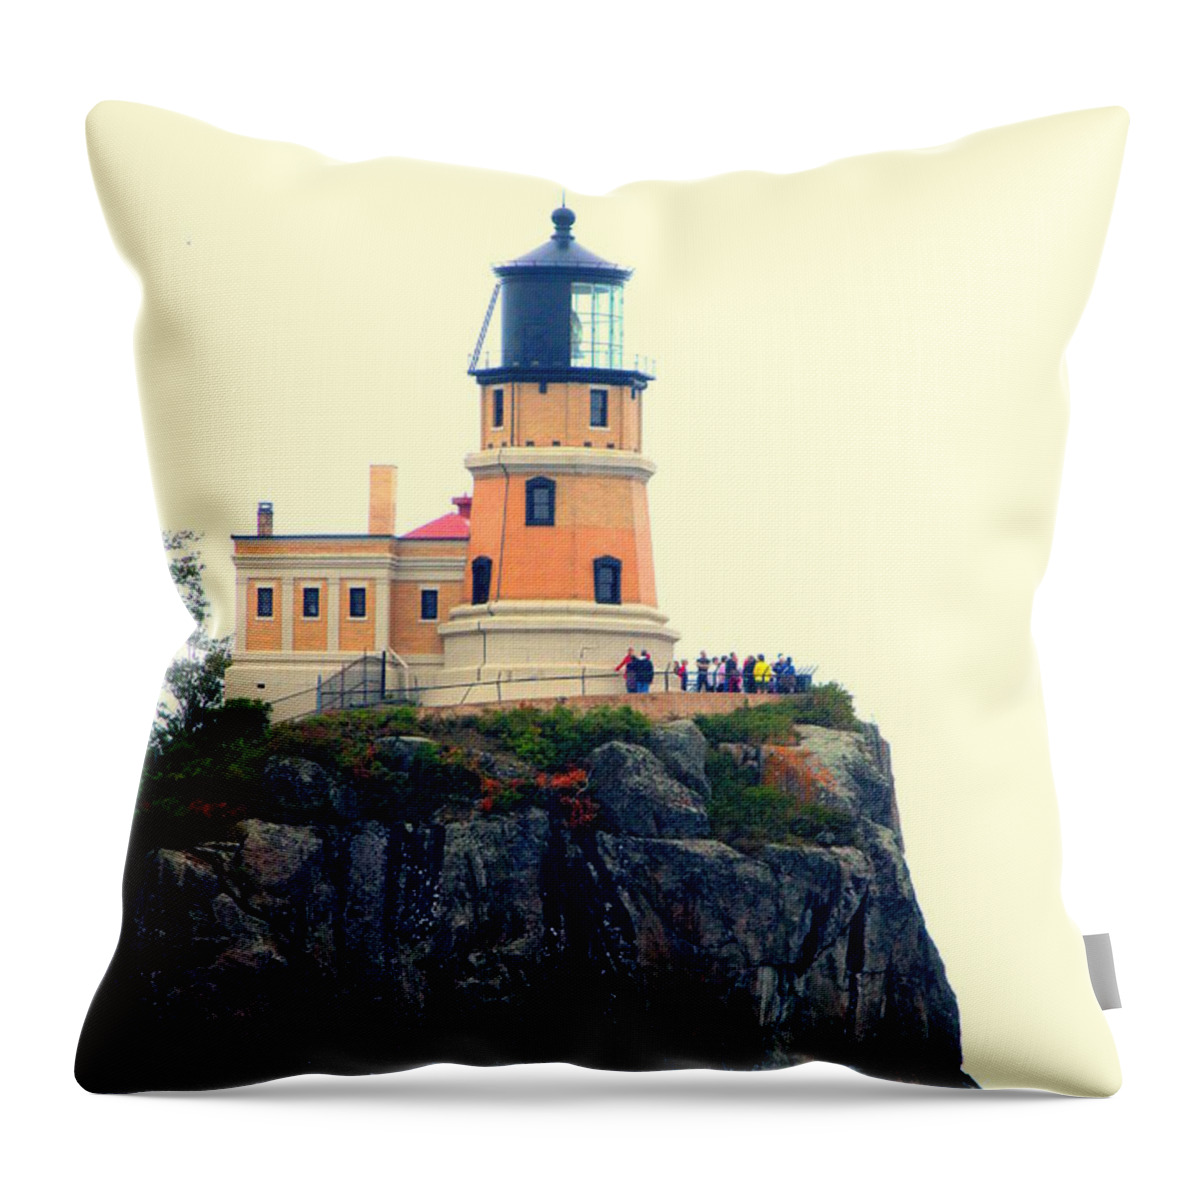 Split Rock Lighthouse Throw Pillow featuring the photograph Split Rock Lighthouse by John Olson